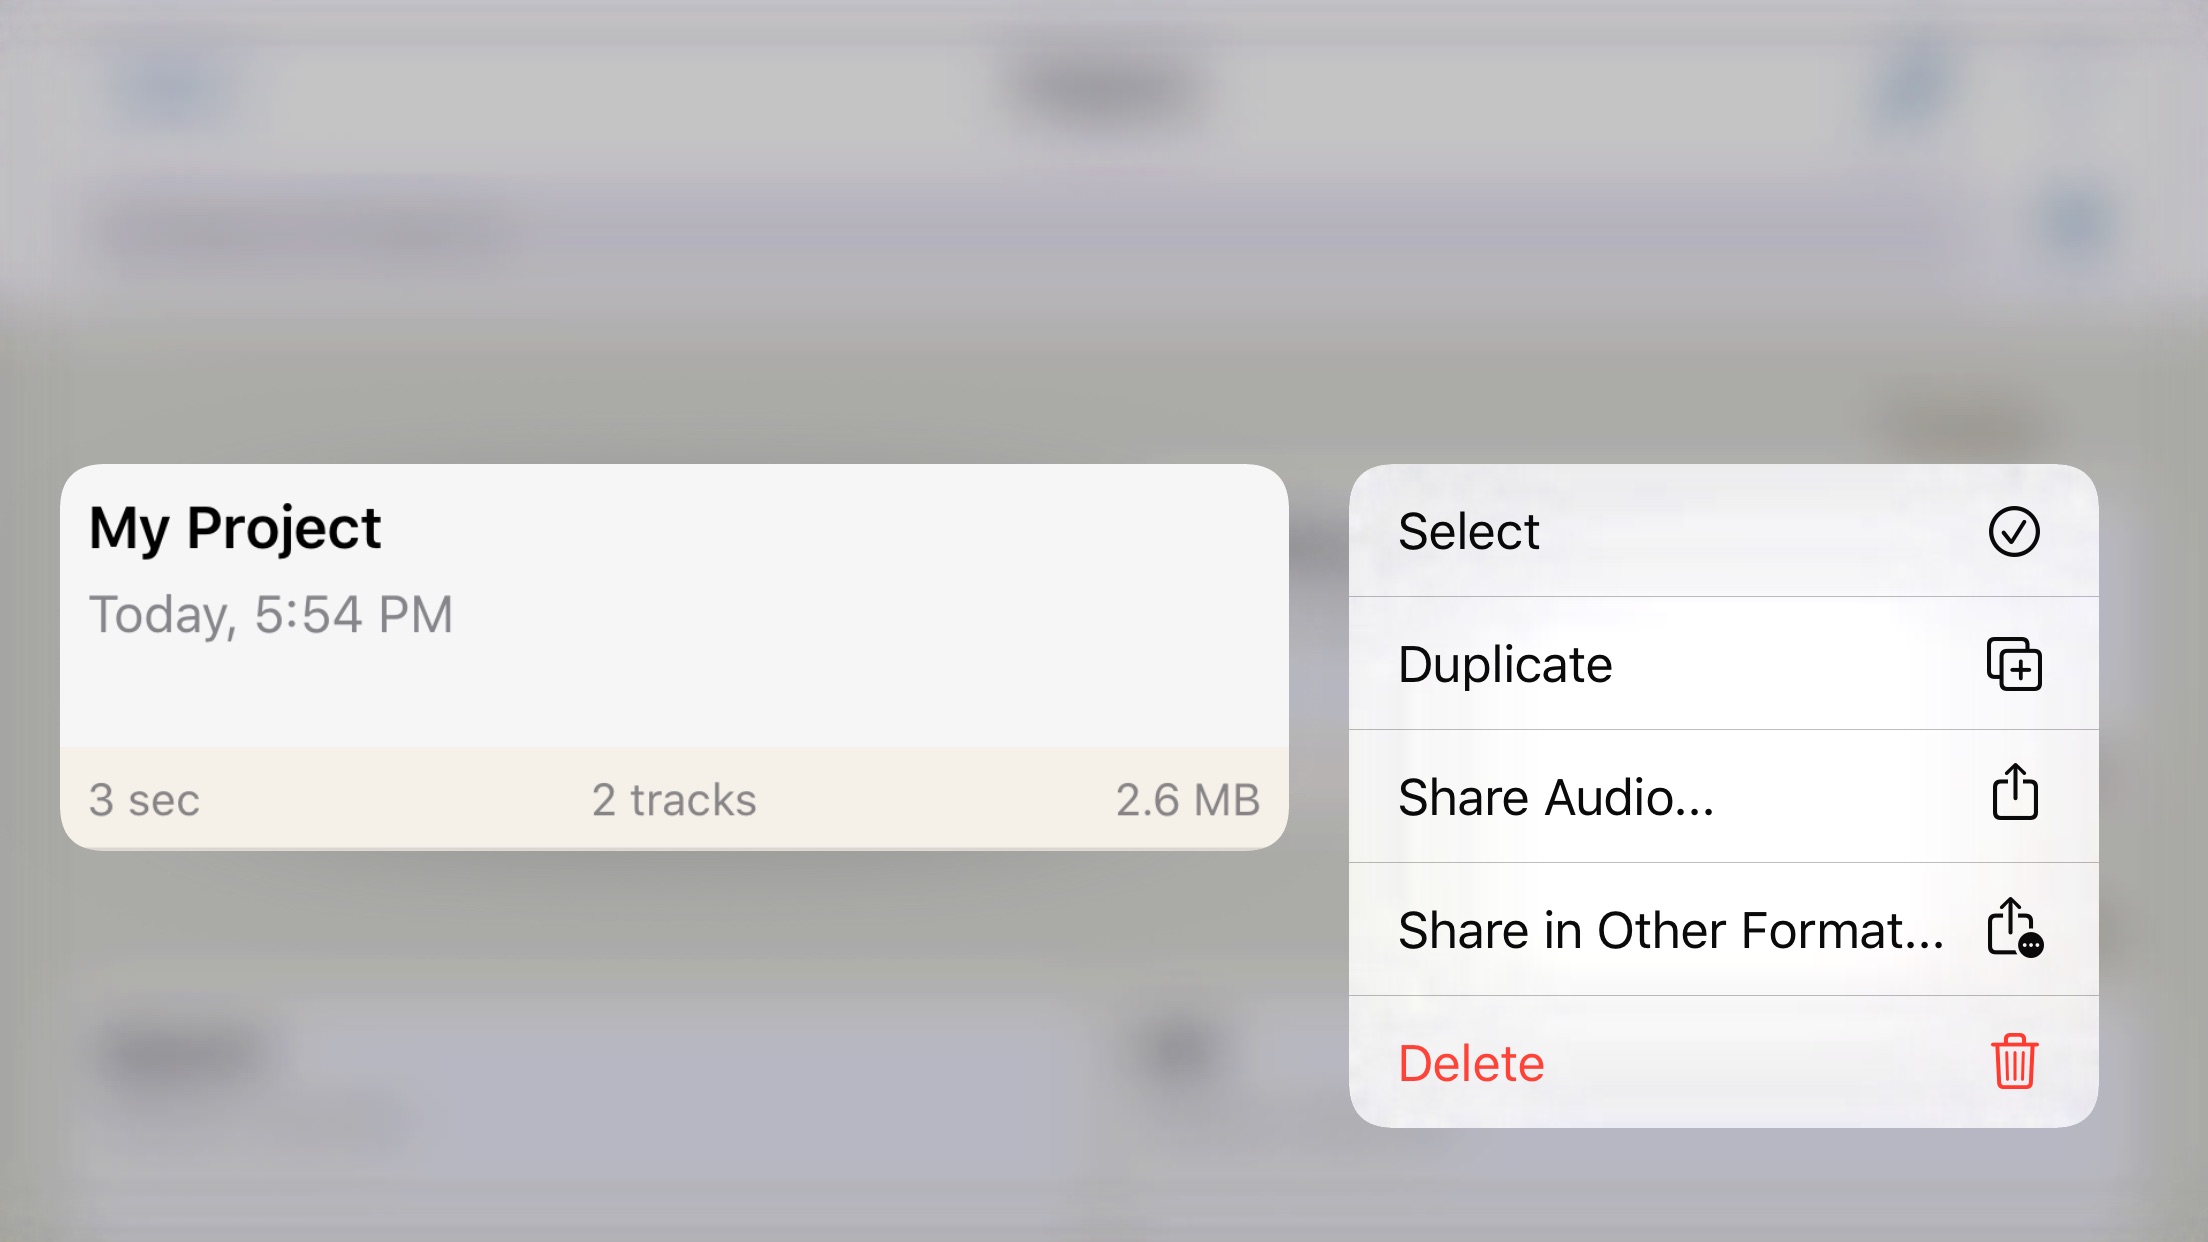 Export via iTunes, Dropbox or other apps